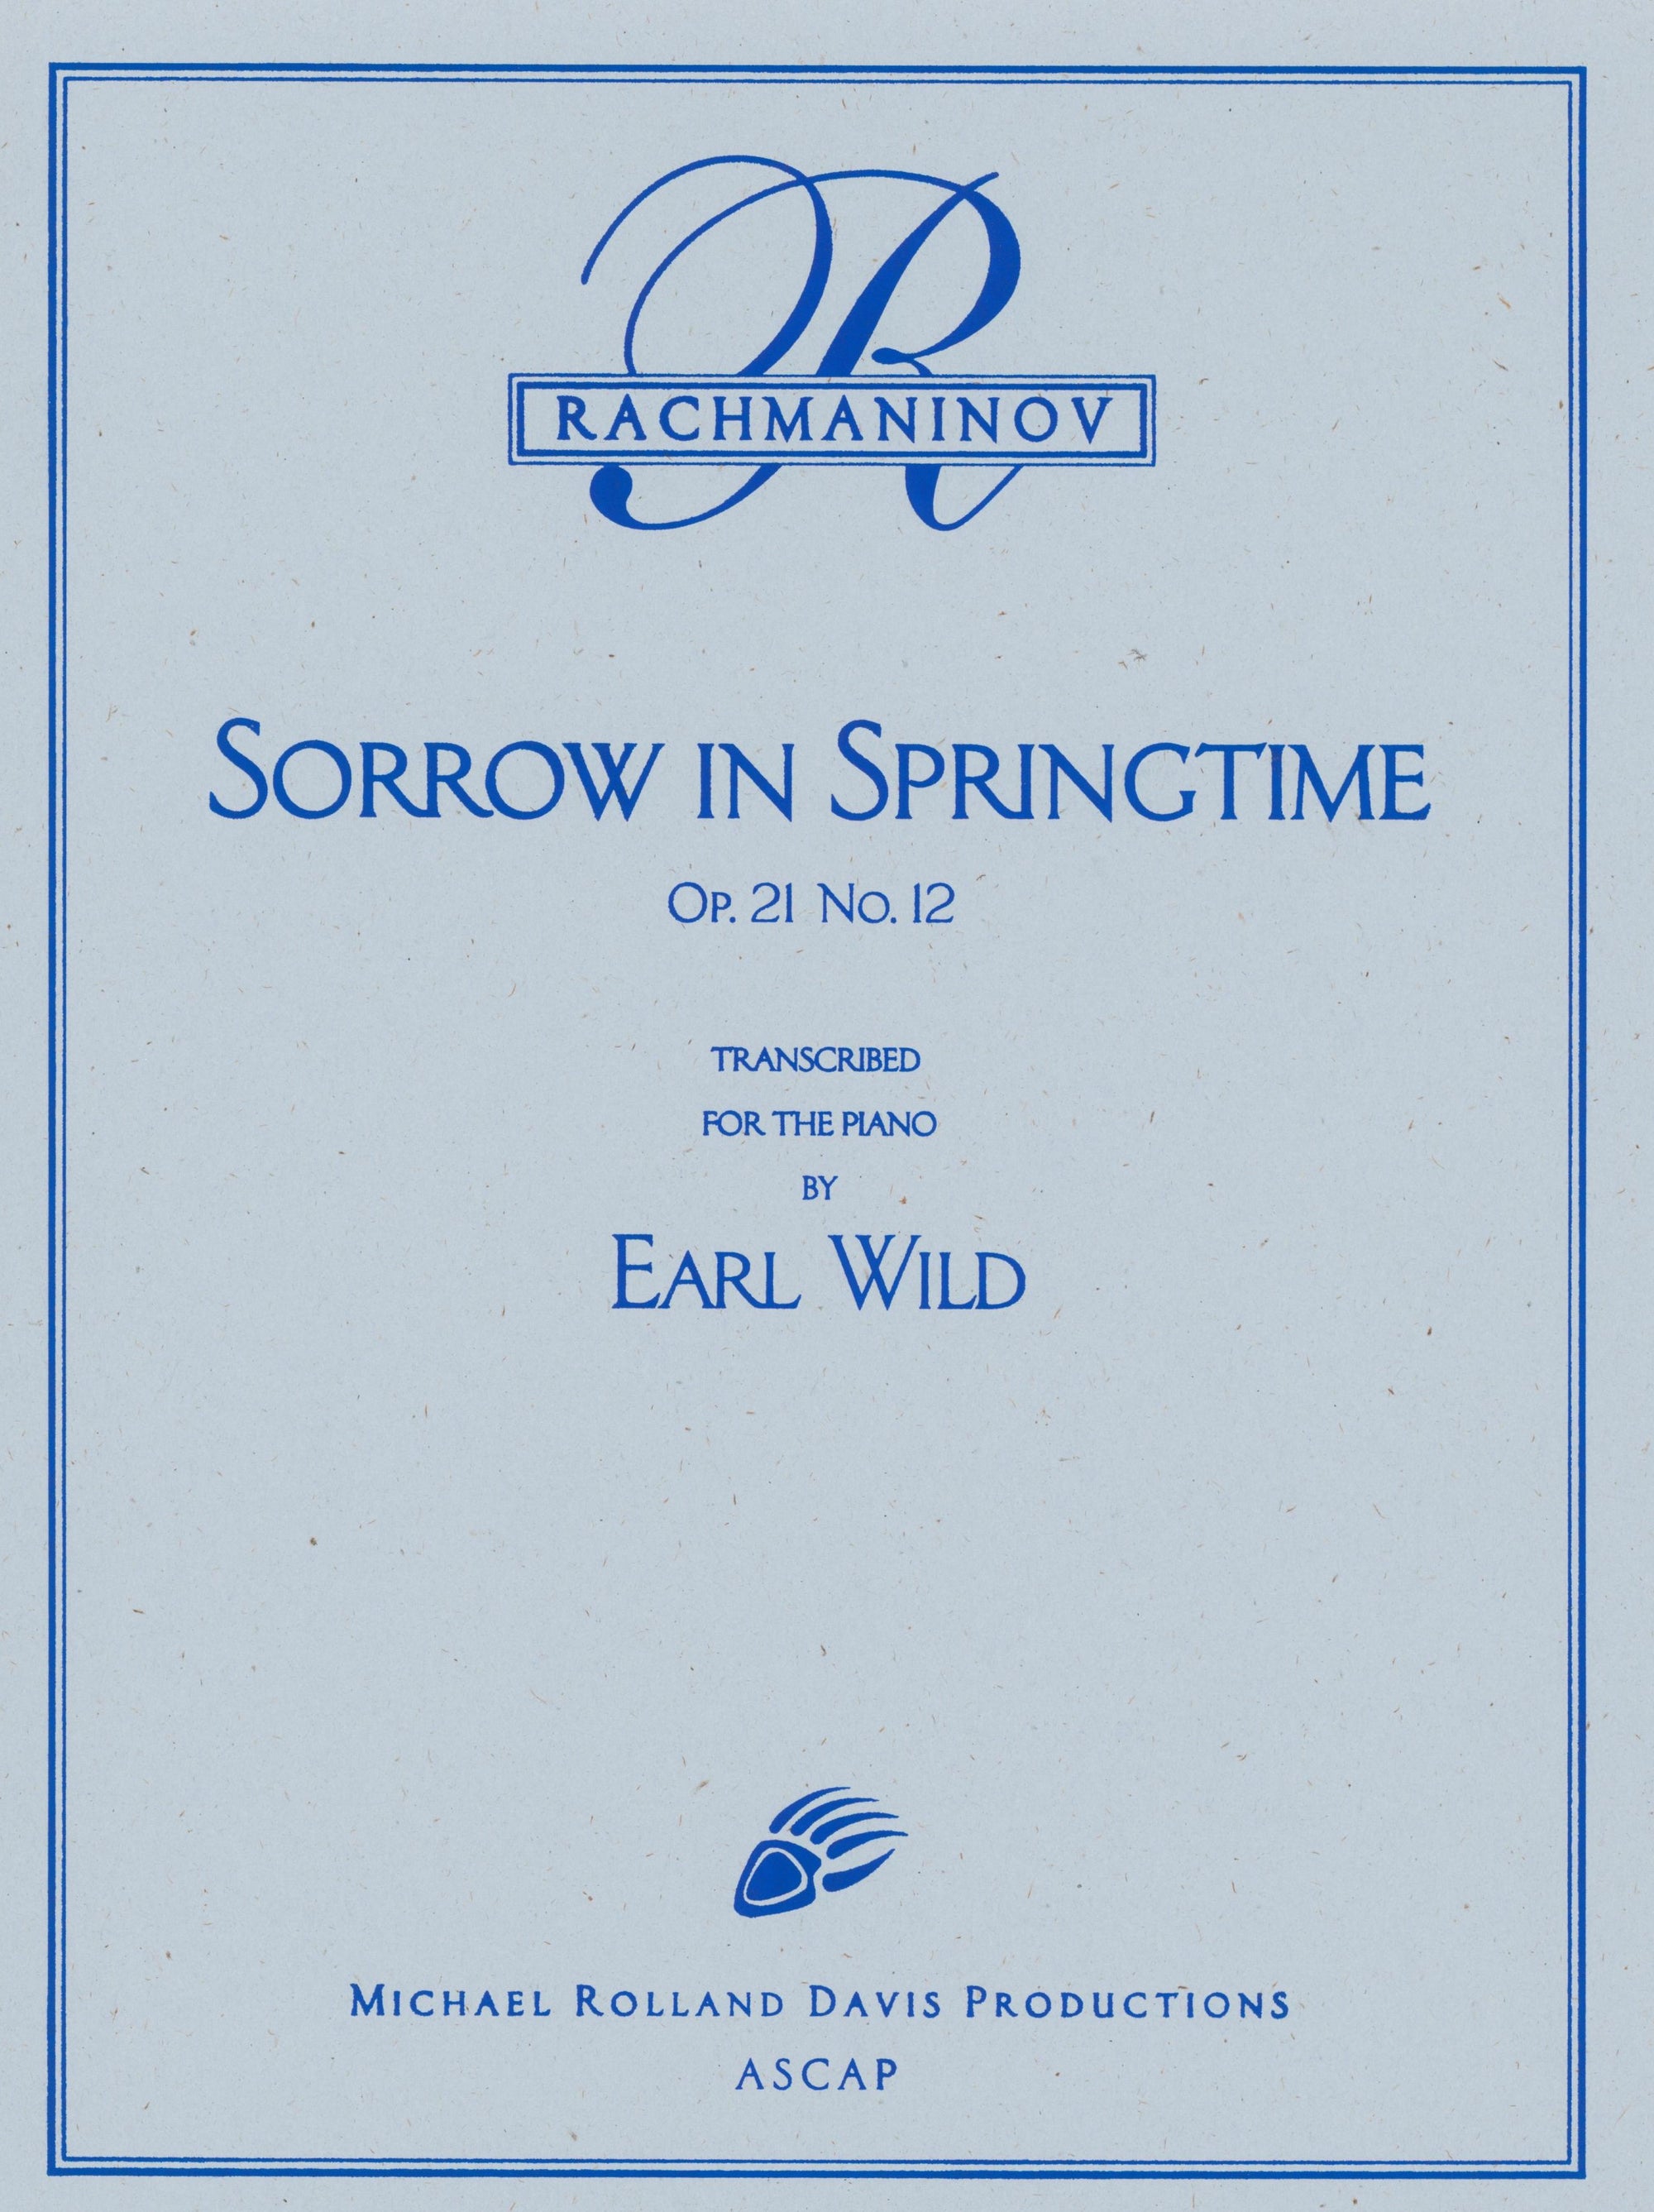 Rachmaninoff-Wild: Sorrow in Springtime, Op. 21, No. 12